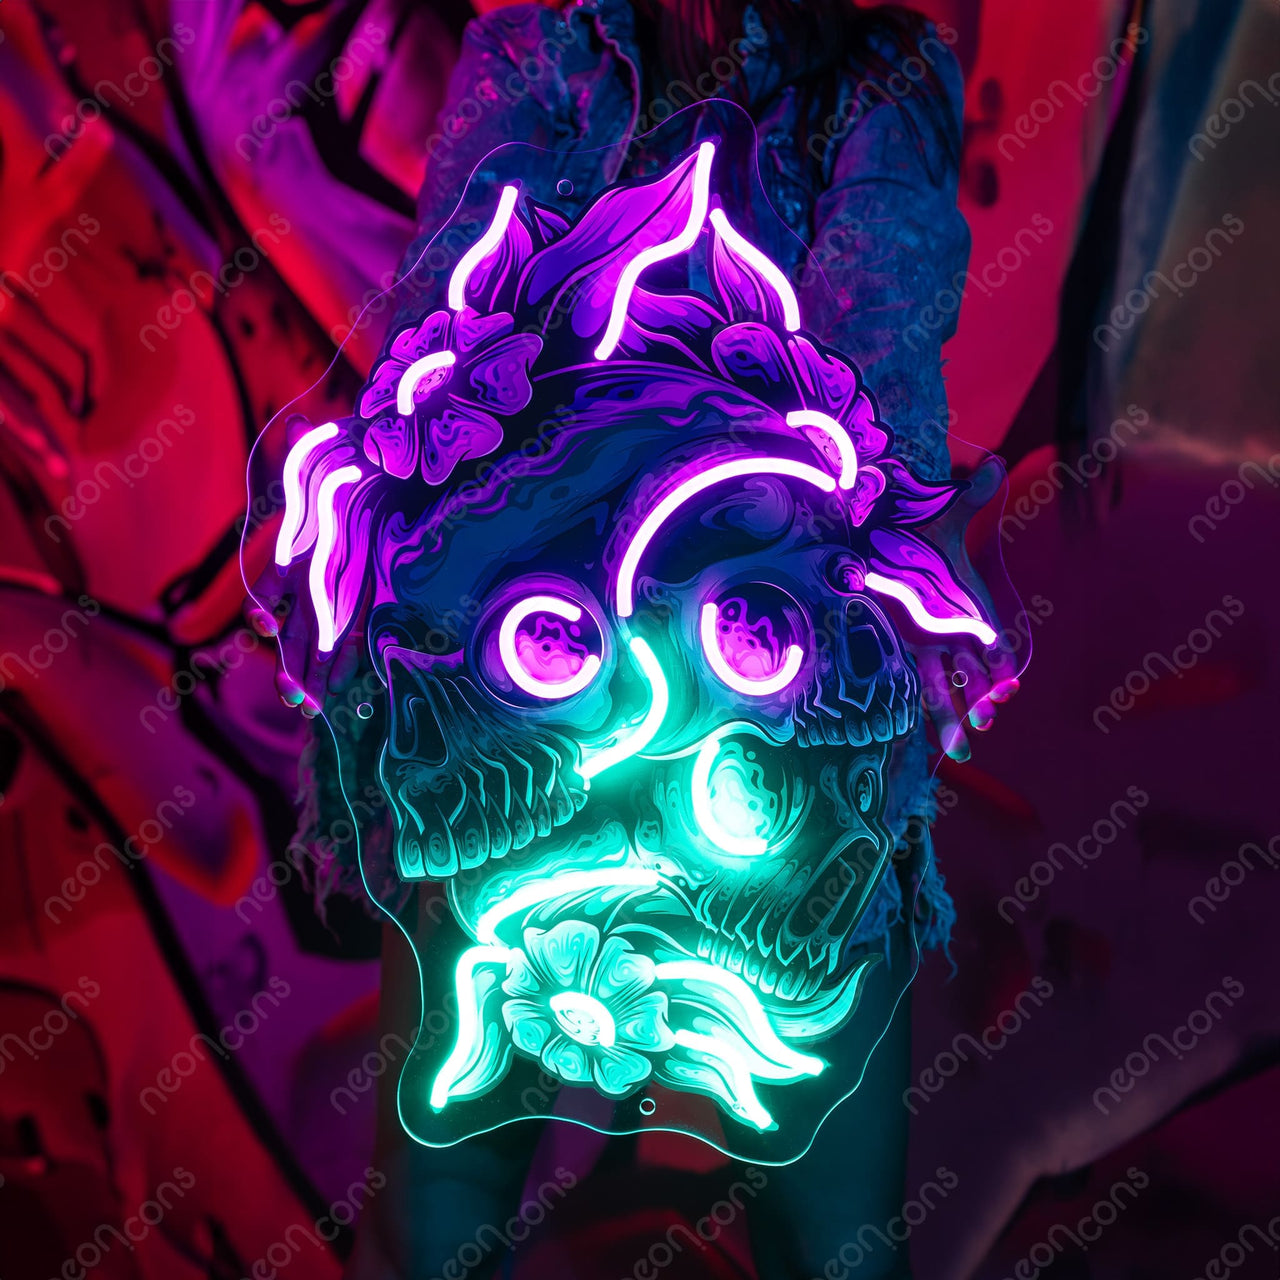 "Bones In Bloom" Neon x Acrylic Artwork by Neon Icons